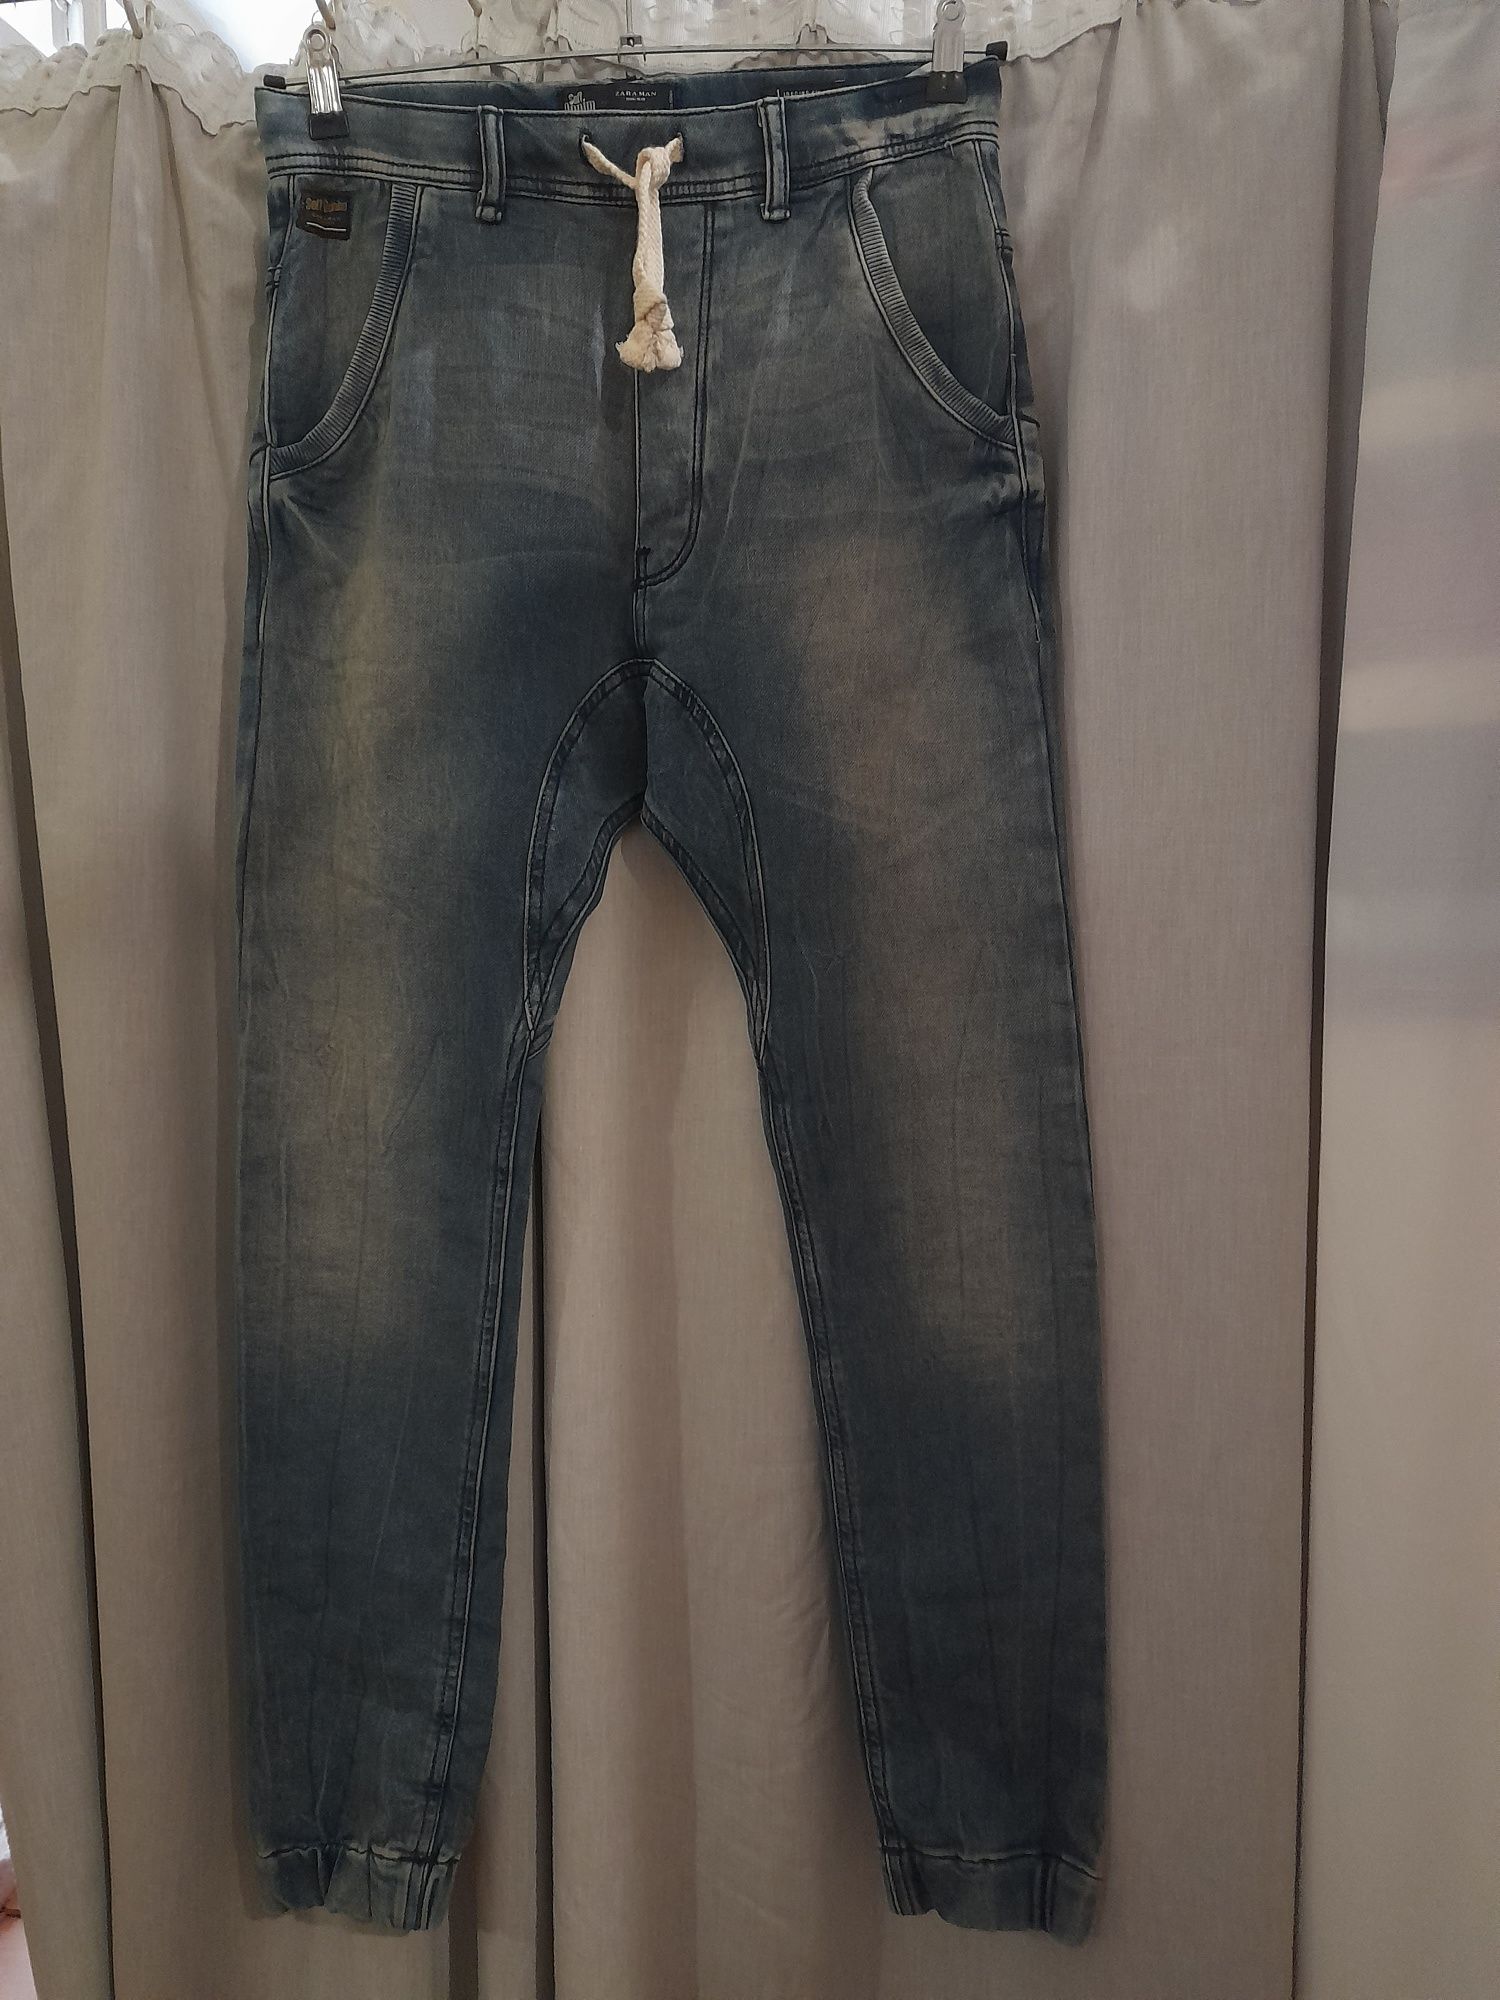 Zara man soft denim мужские джогеры джинсы S